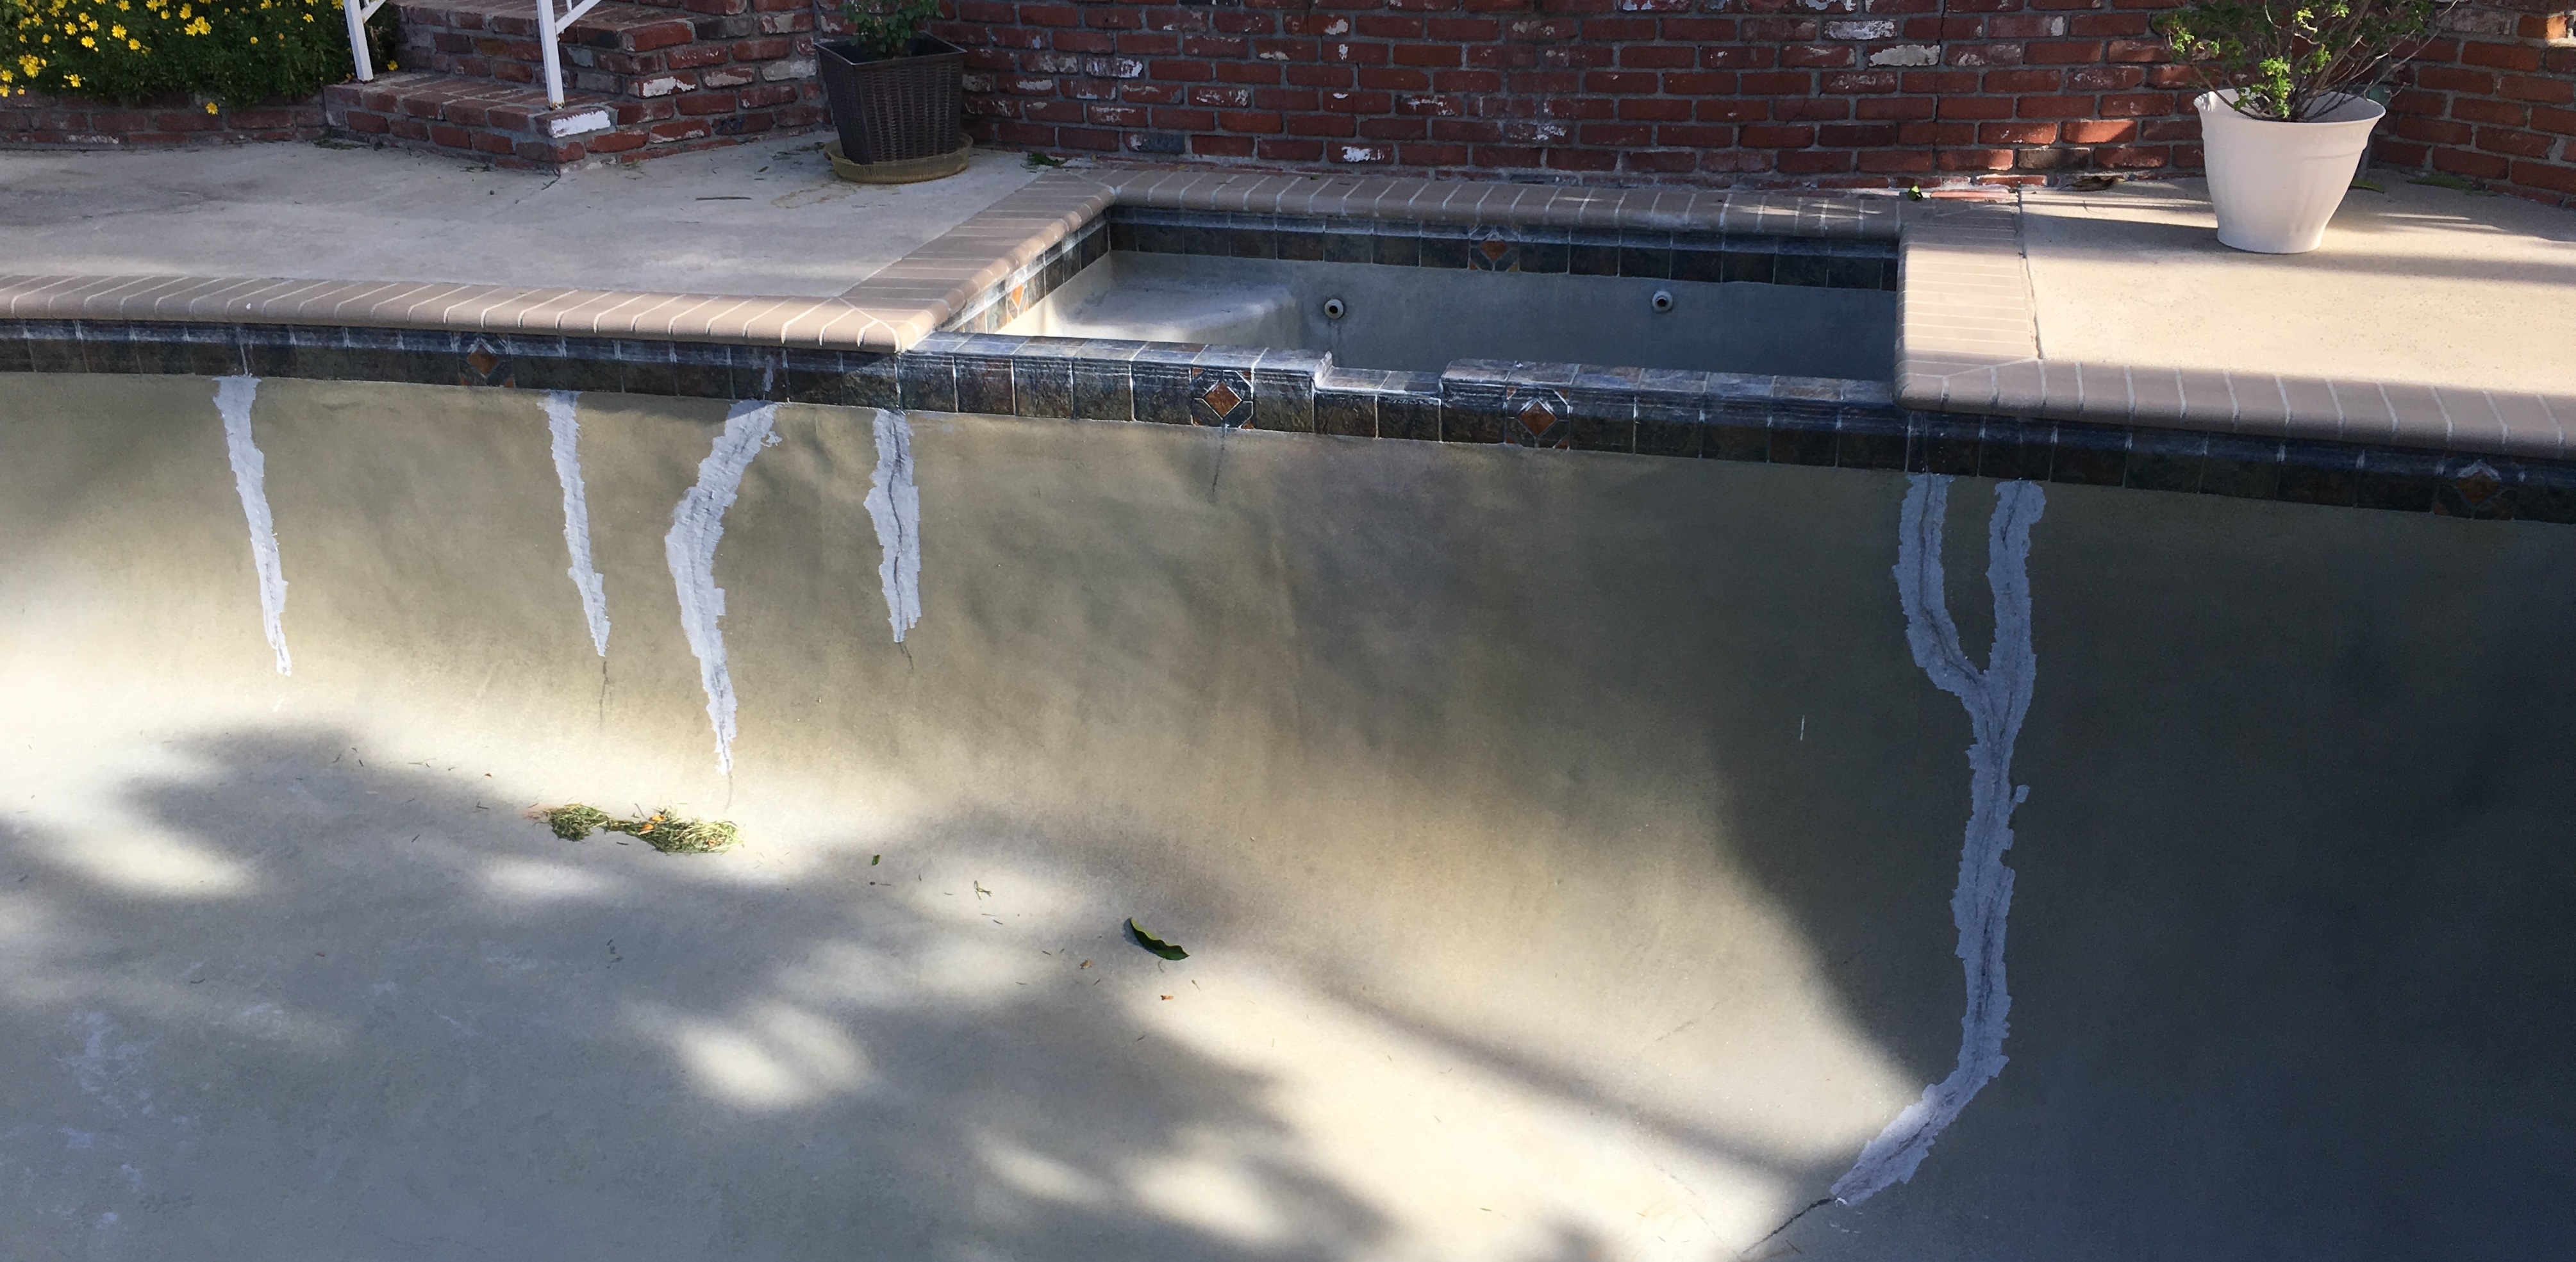 do it yourself pool plaster repair